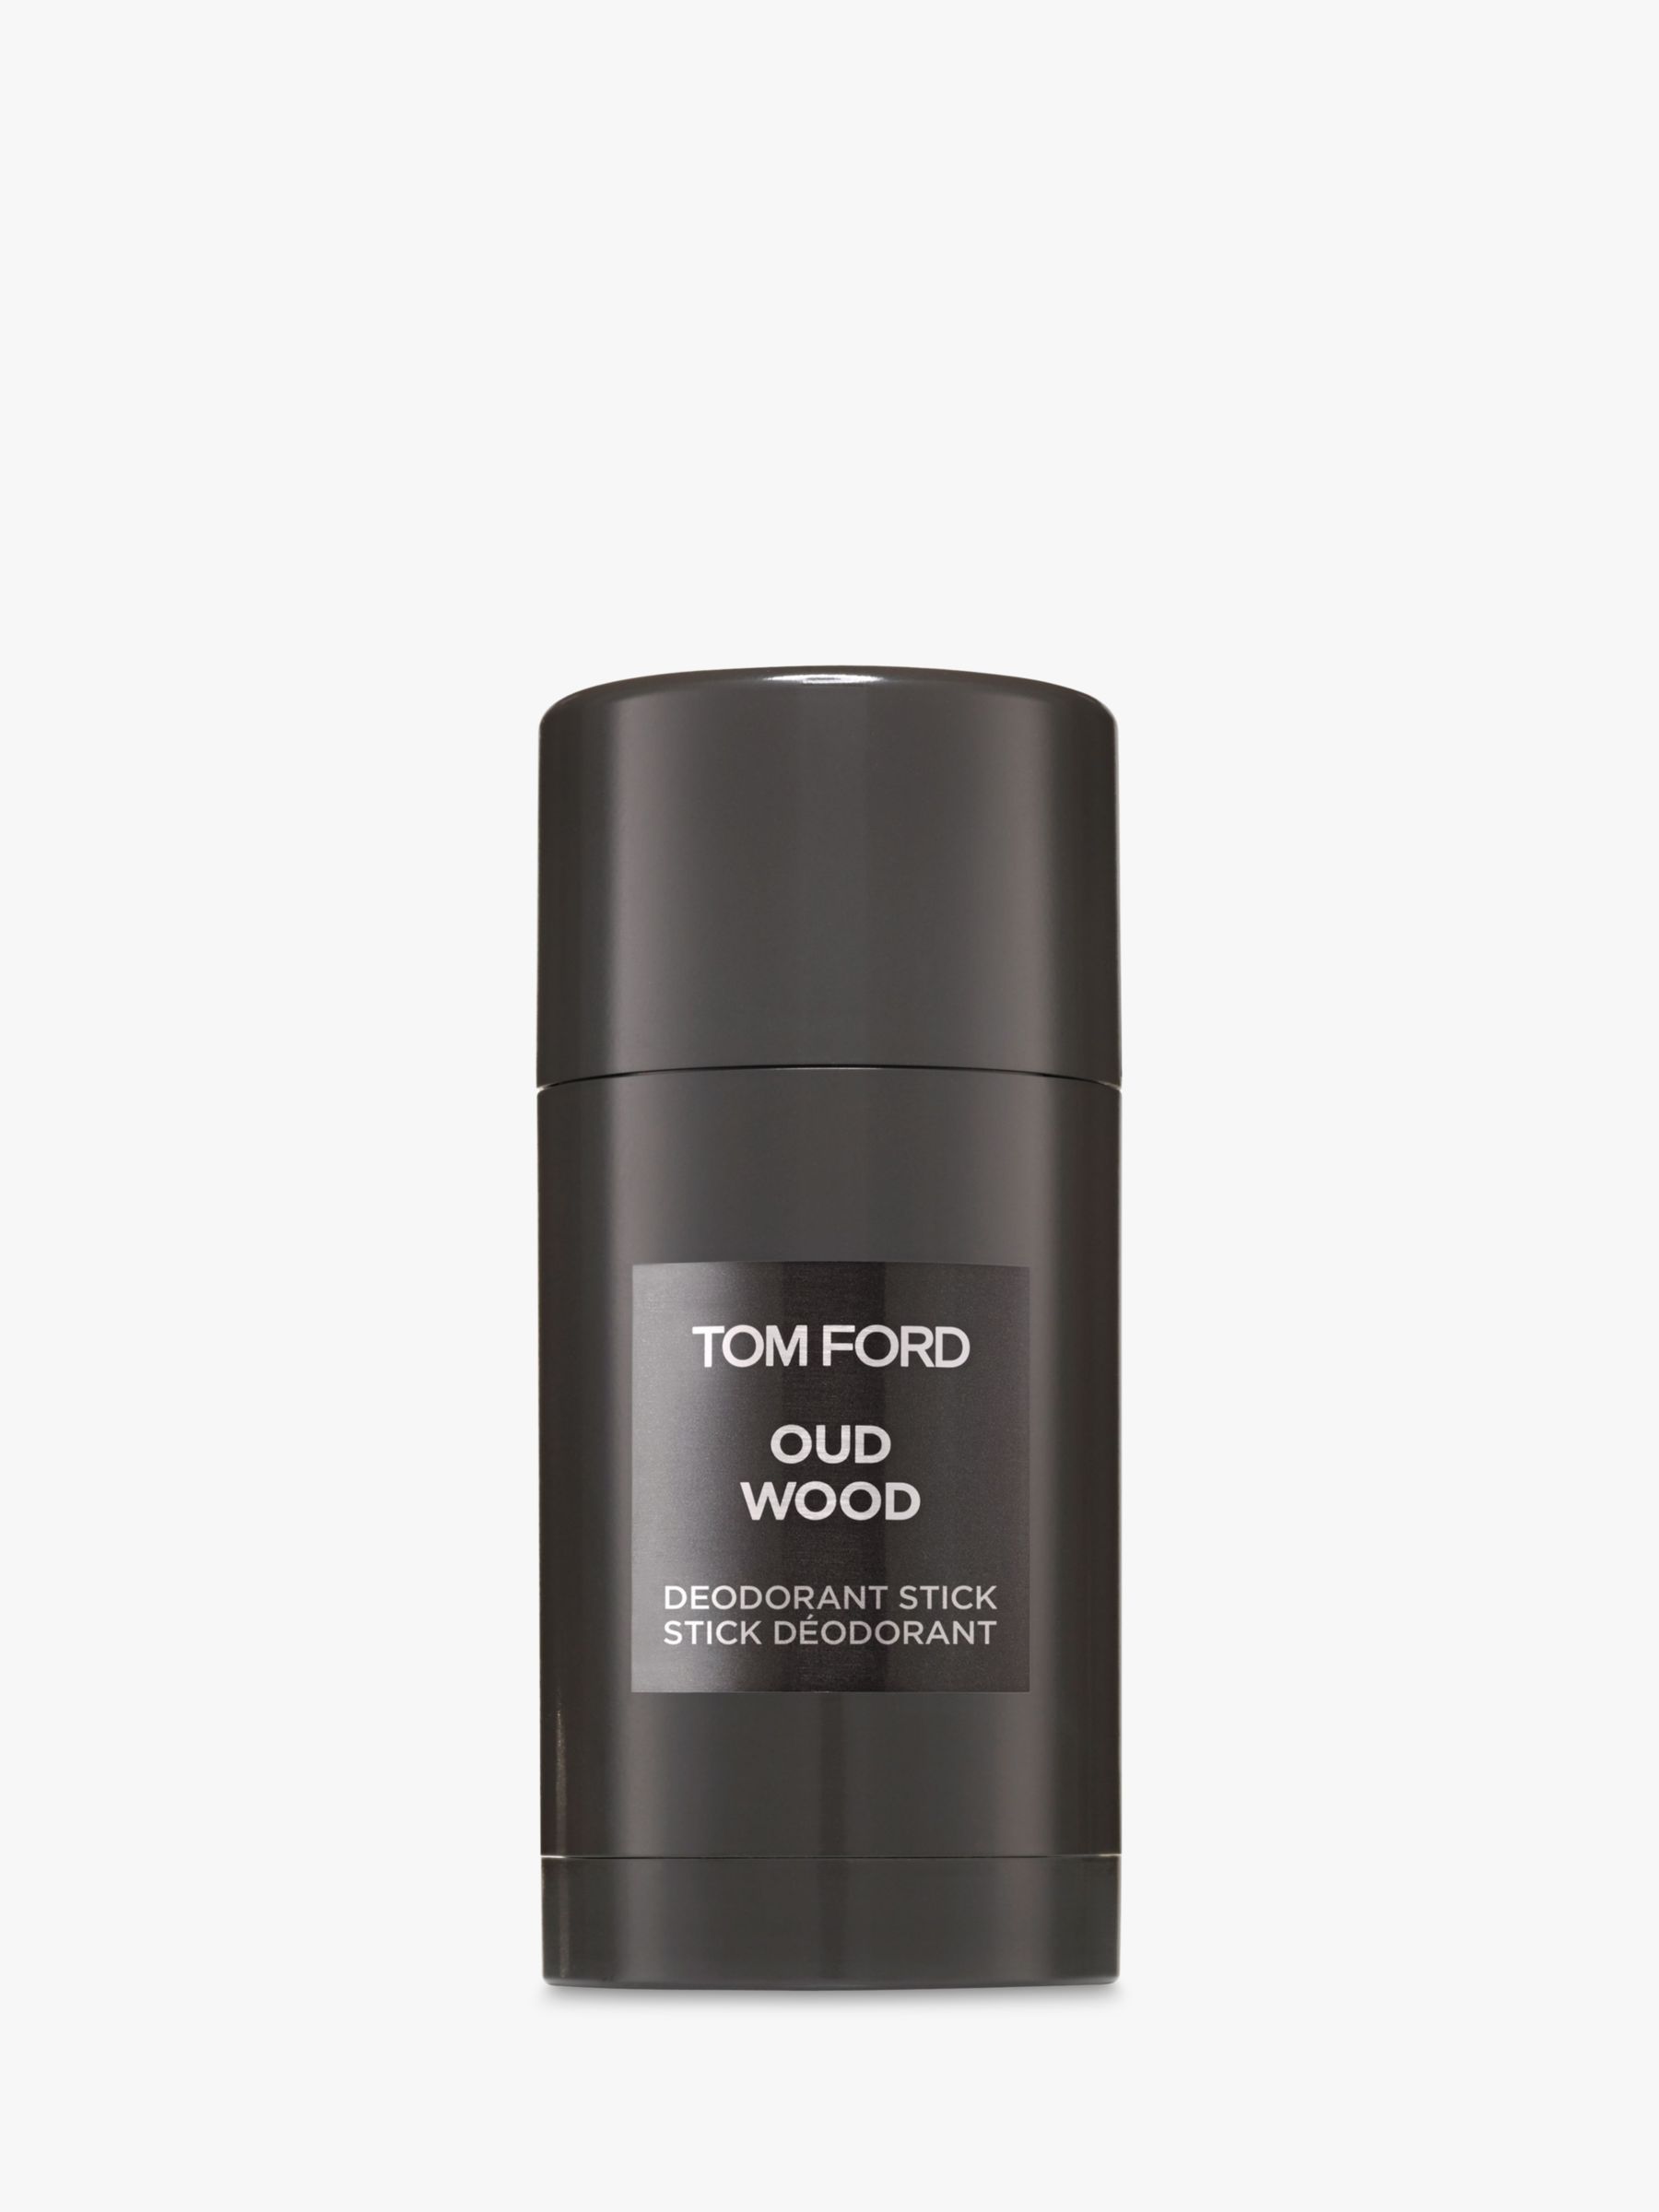 TOM FORD Private Blend Oud Wood Deodorant, 75ml